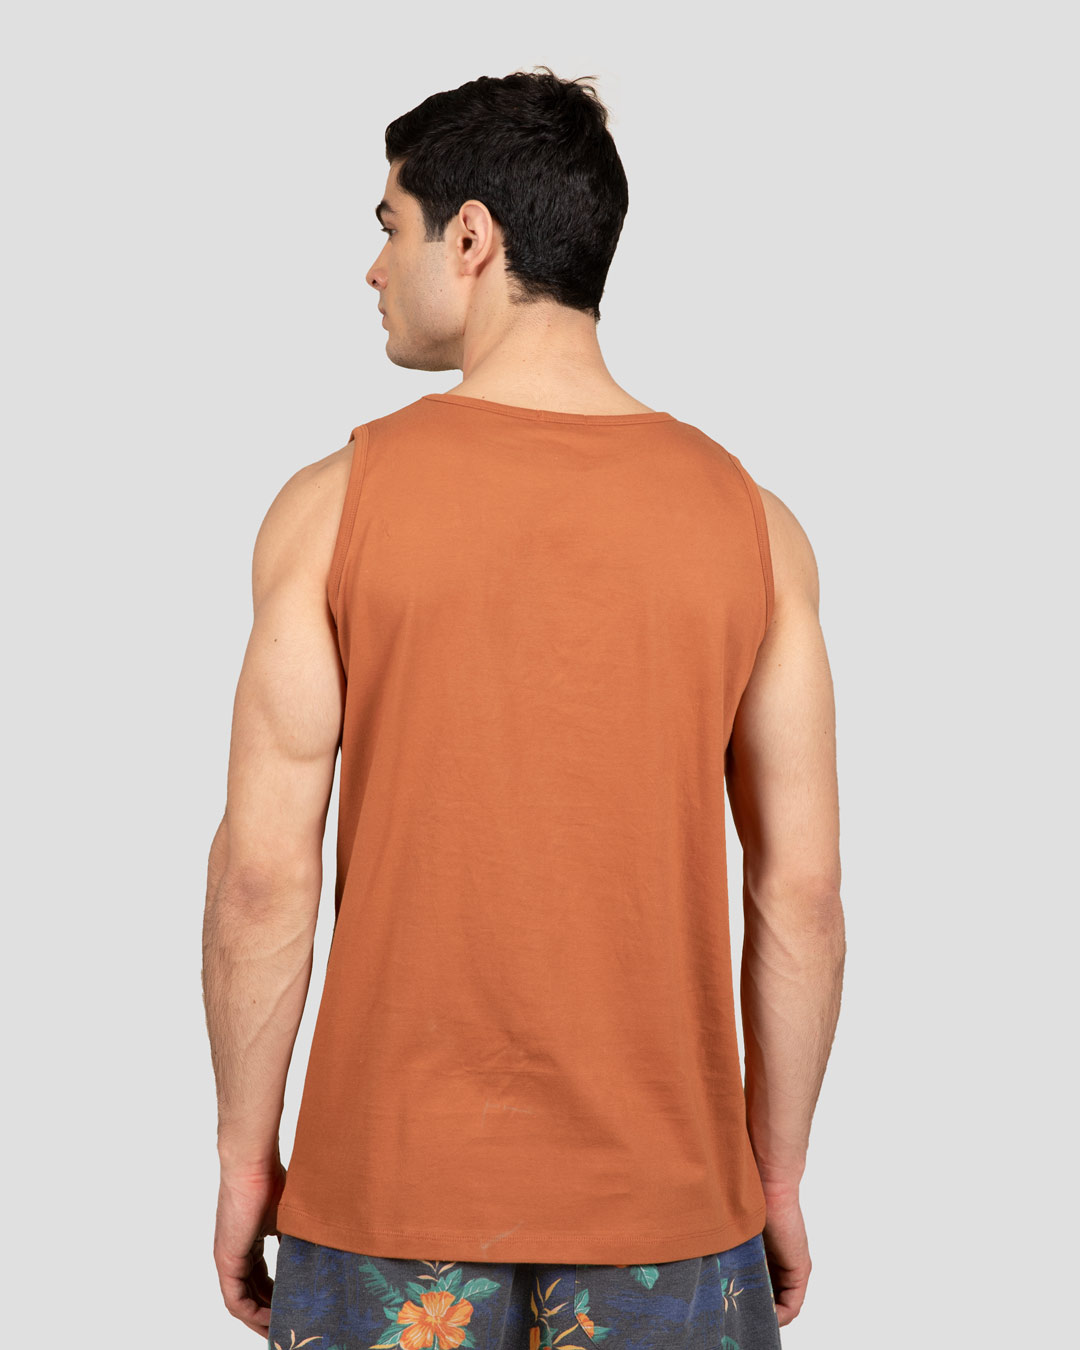 Shop Sadda Pain Round Neck Vest Vintage Orange-Back